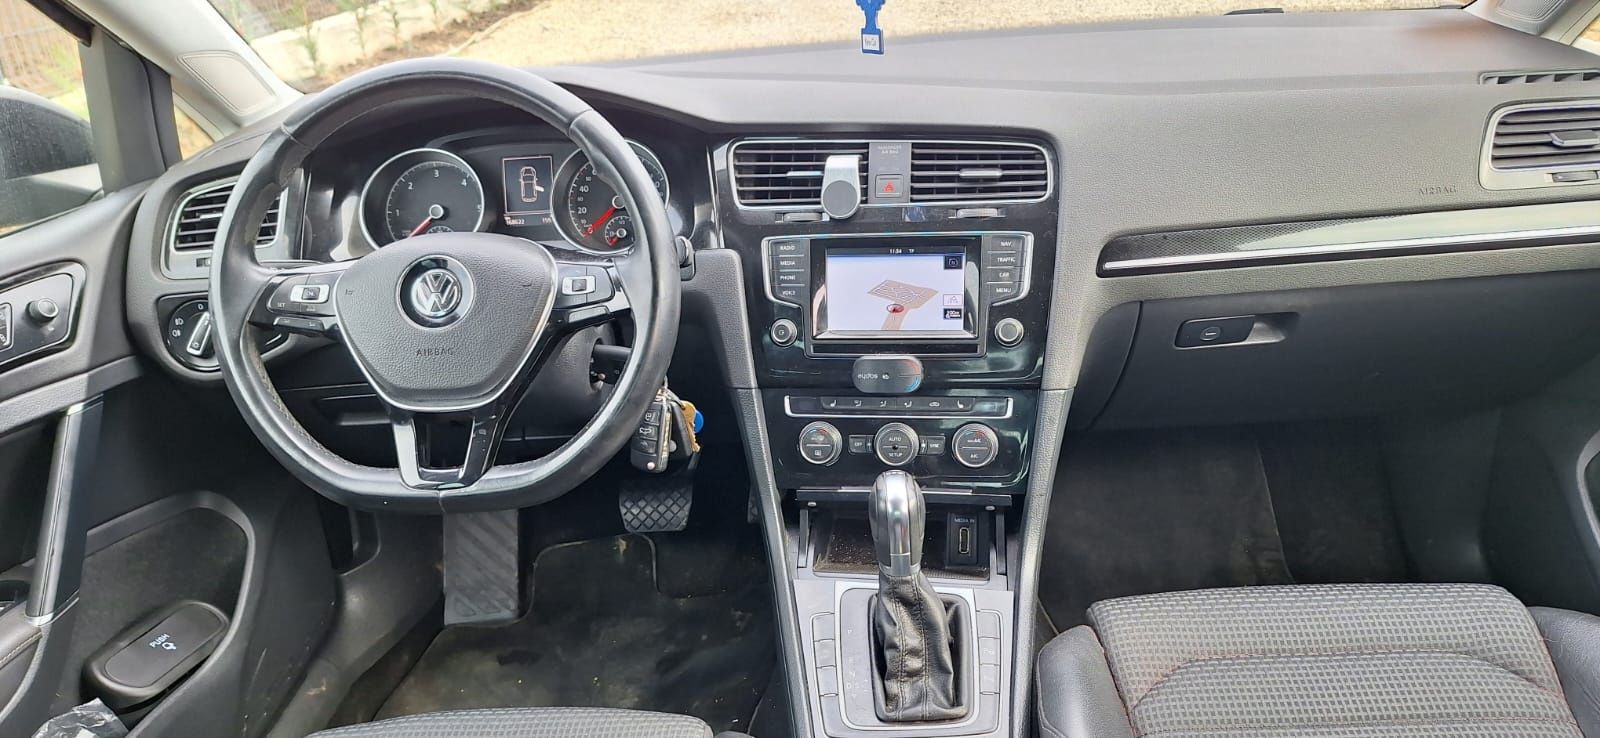 VW Golf 7 2.0 TDI Automat 2014